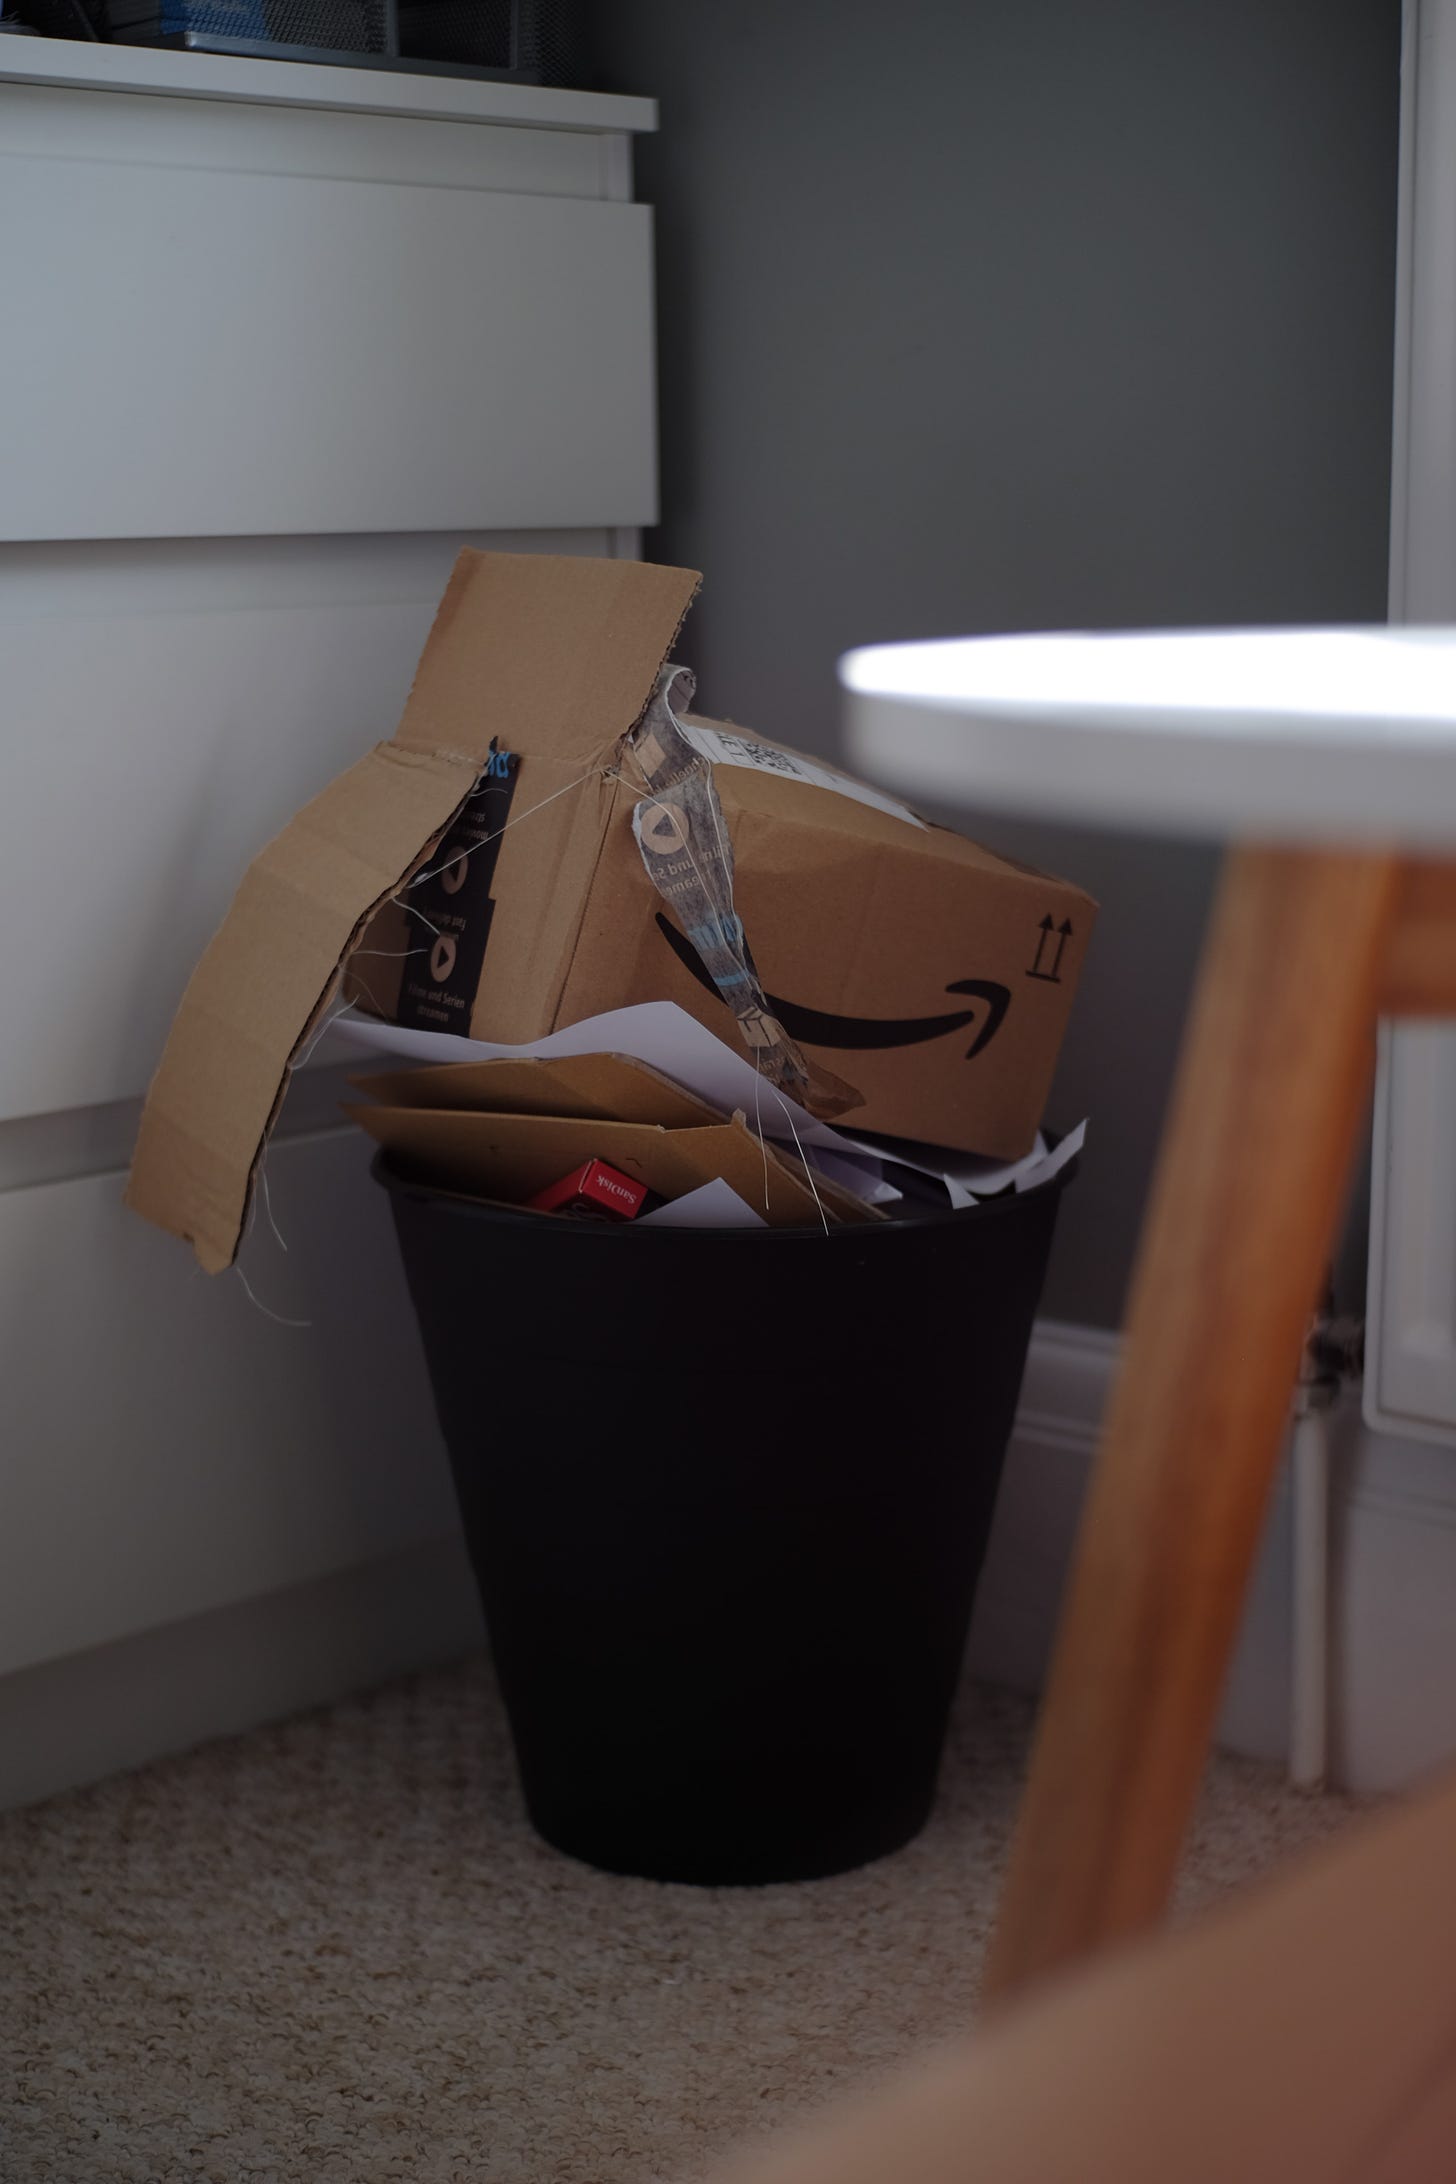 Photo of an Amazon box in the trash. (Sean Robbins / Unsplash)